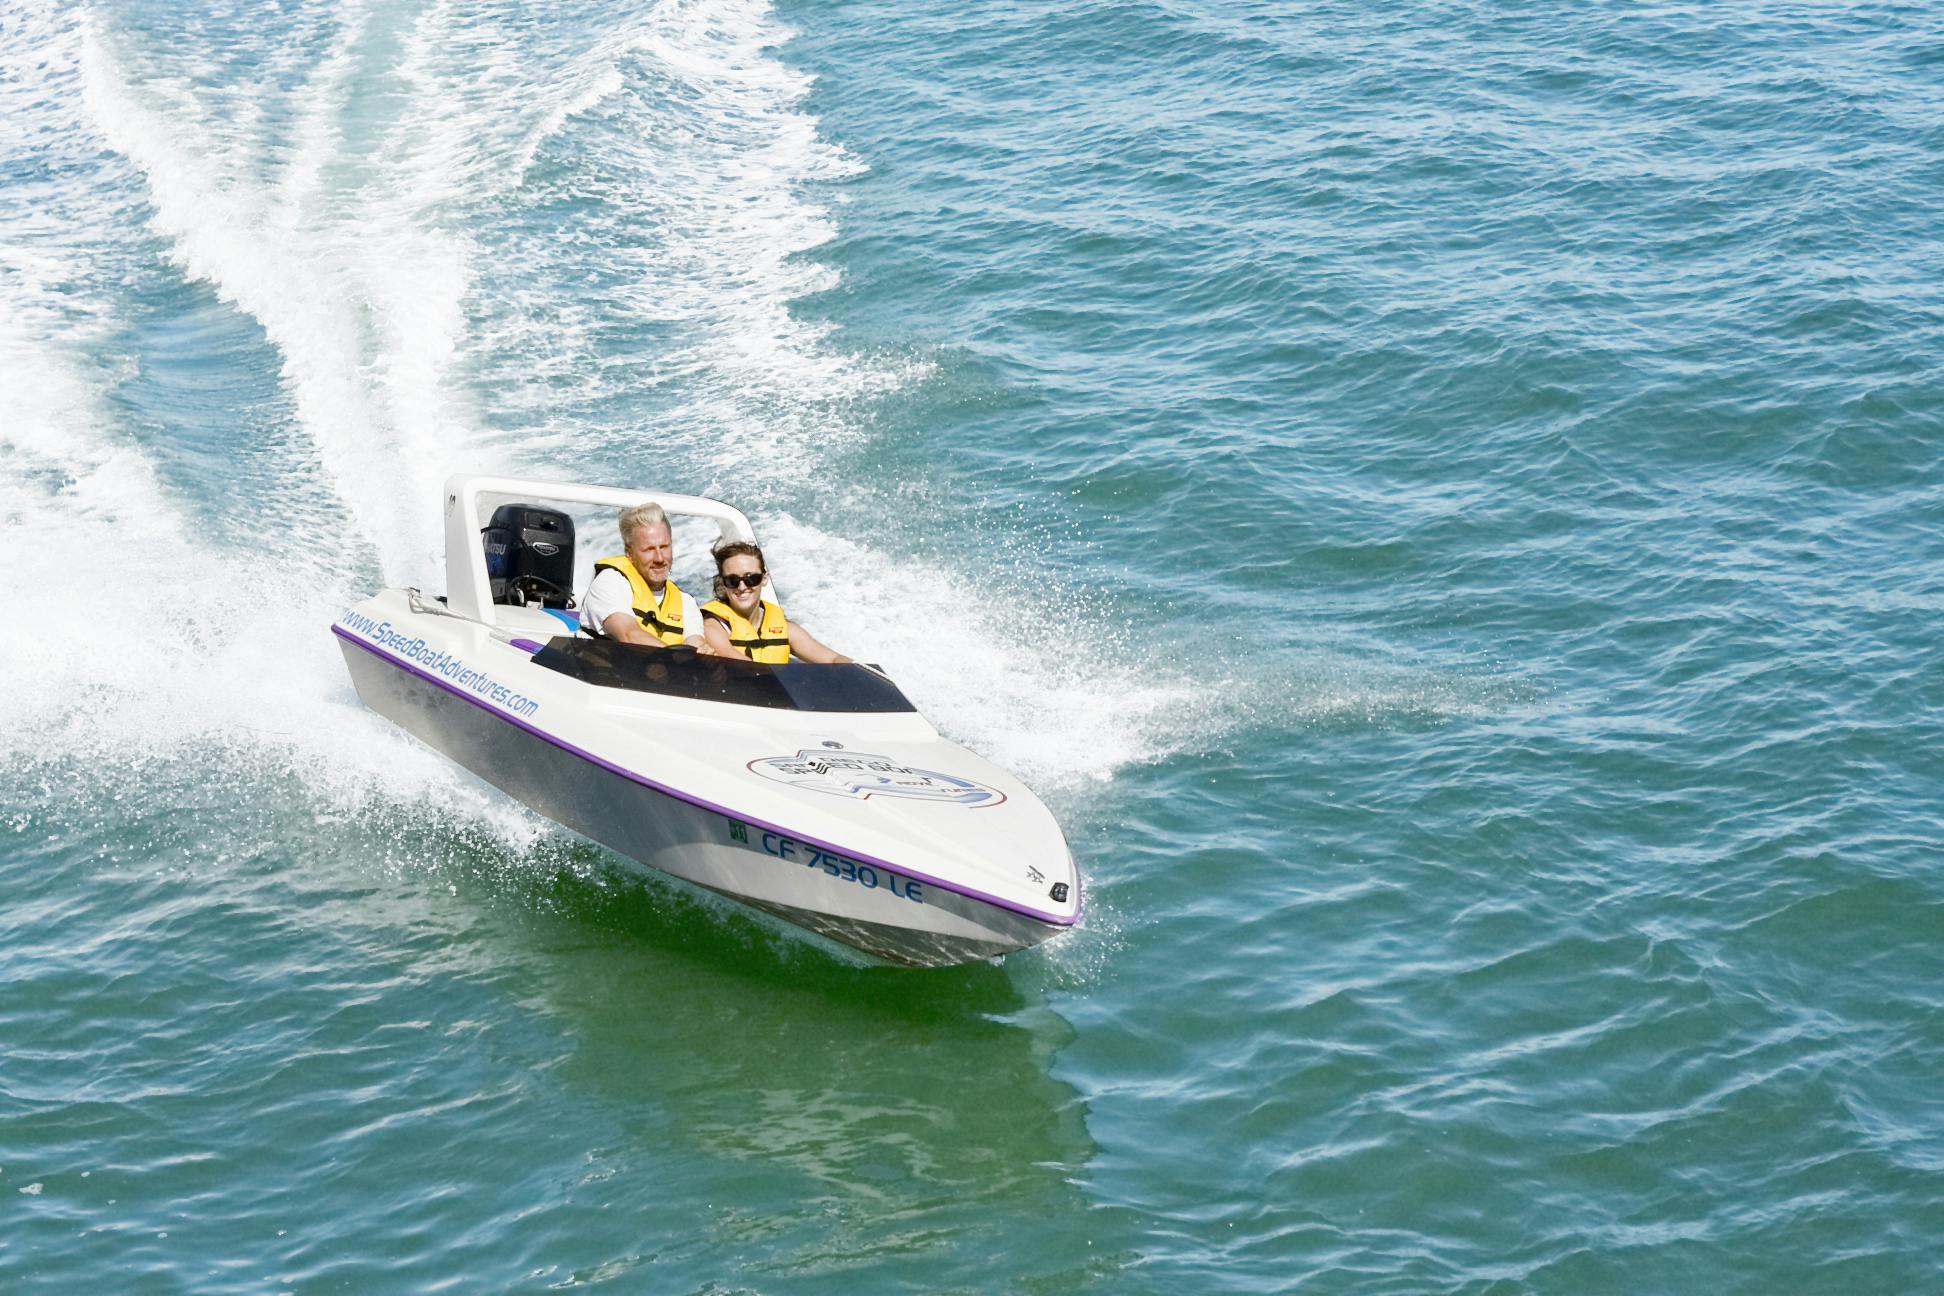 Tampa speed boat adventure tour